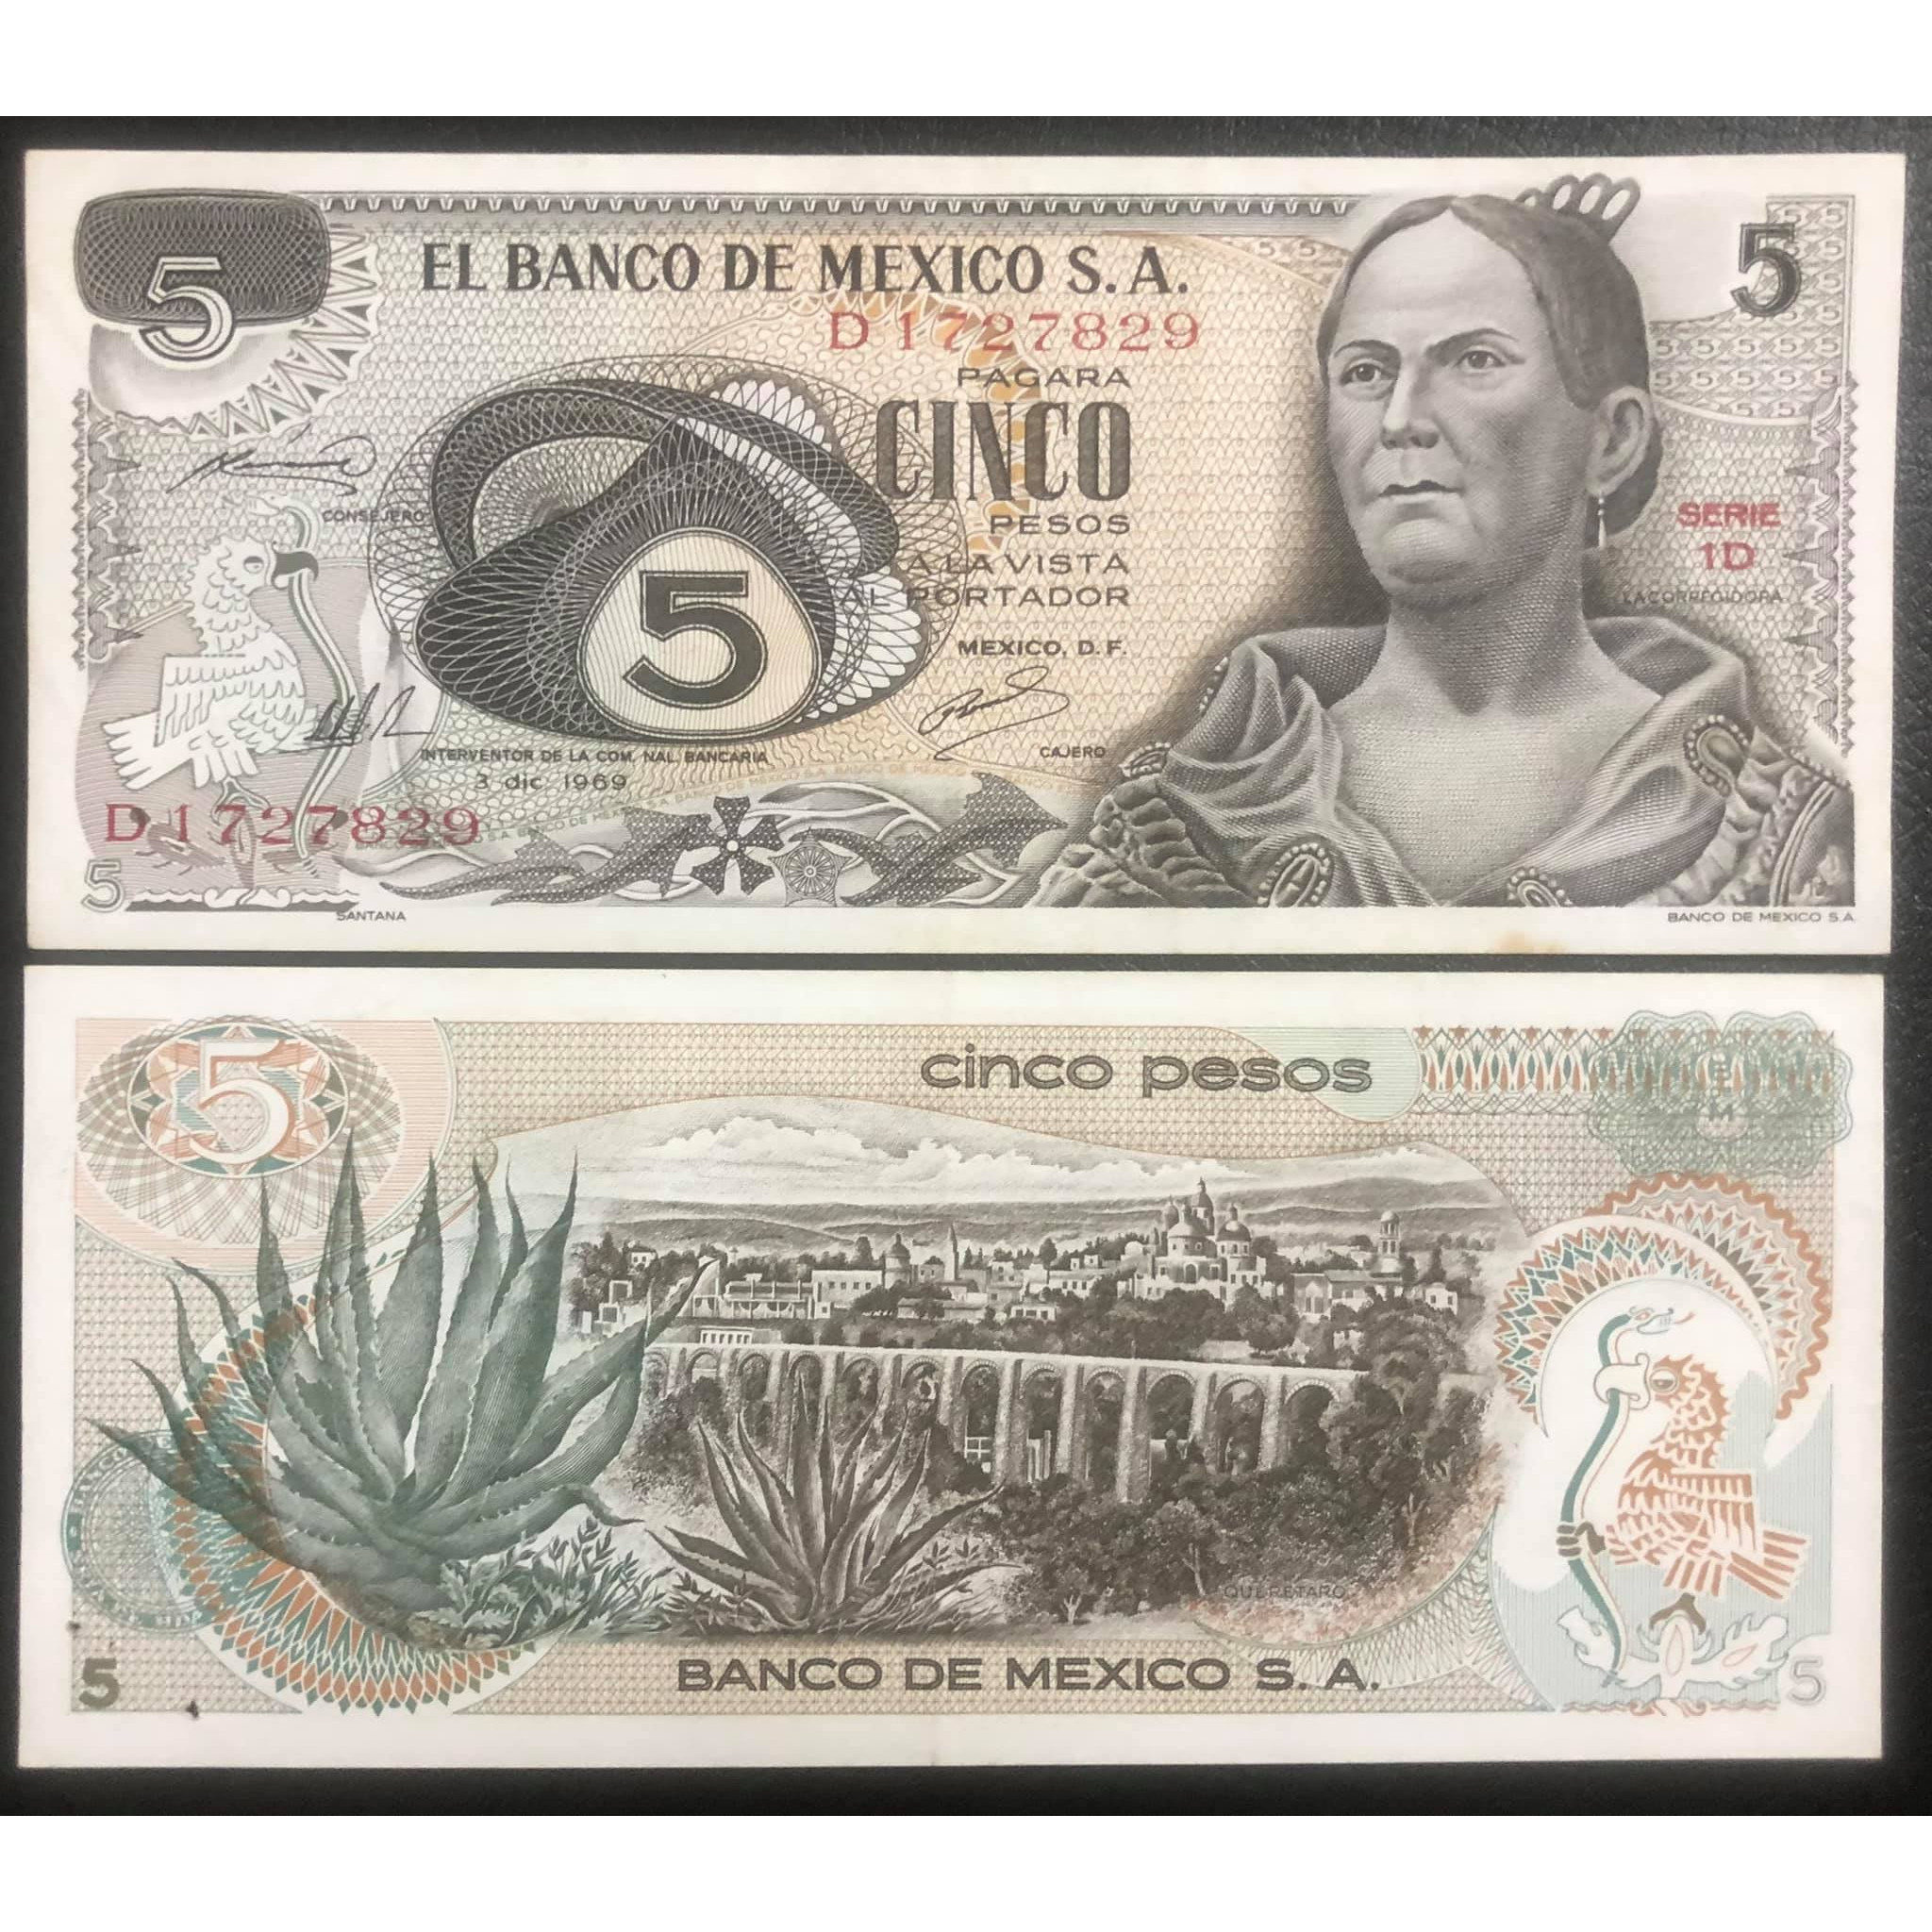 Tiền cổ Mexico 5 pesos sưu tầm